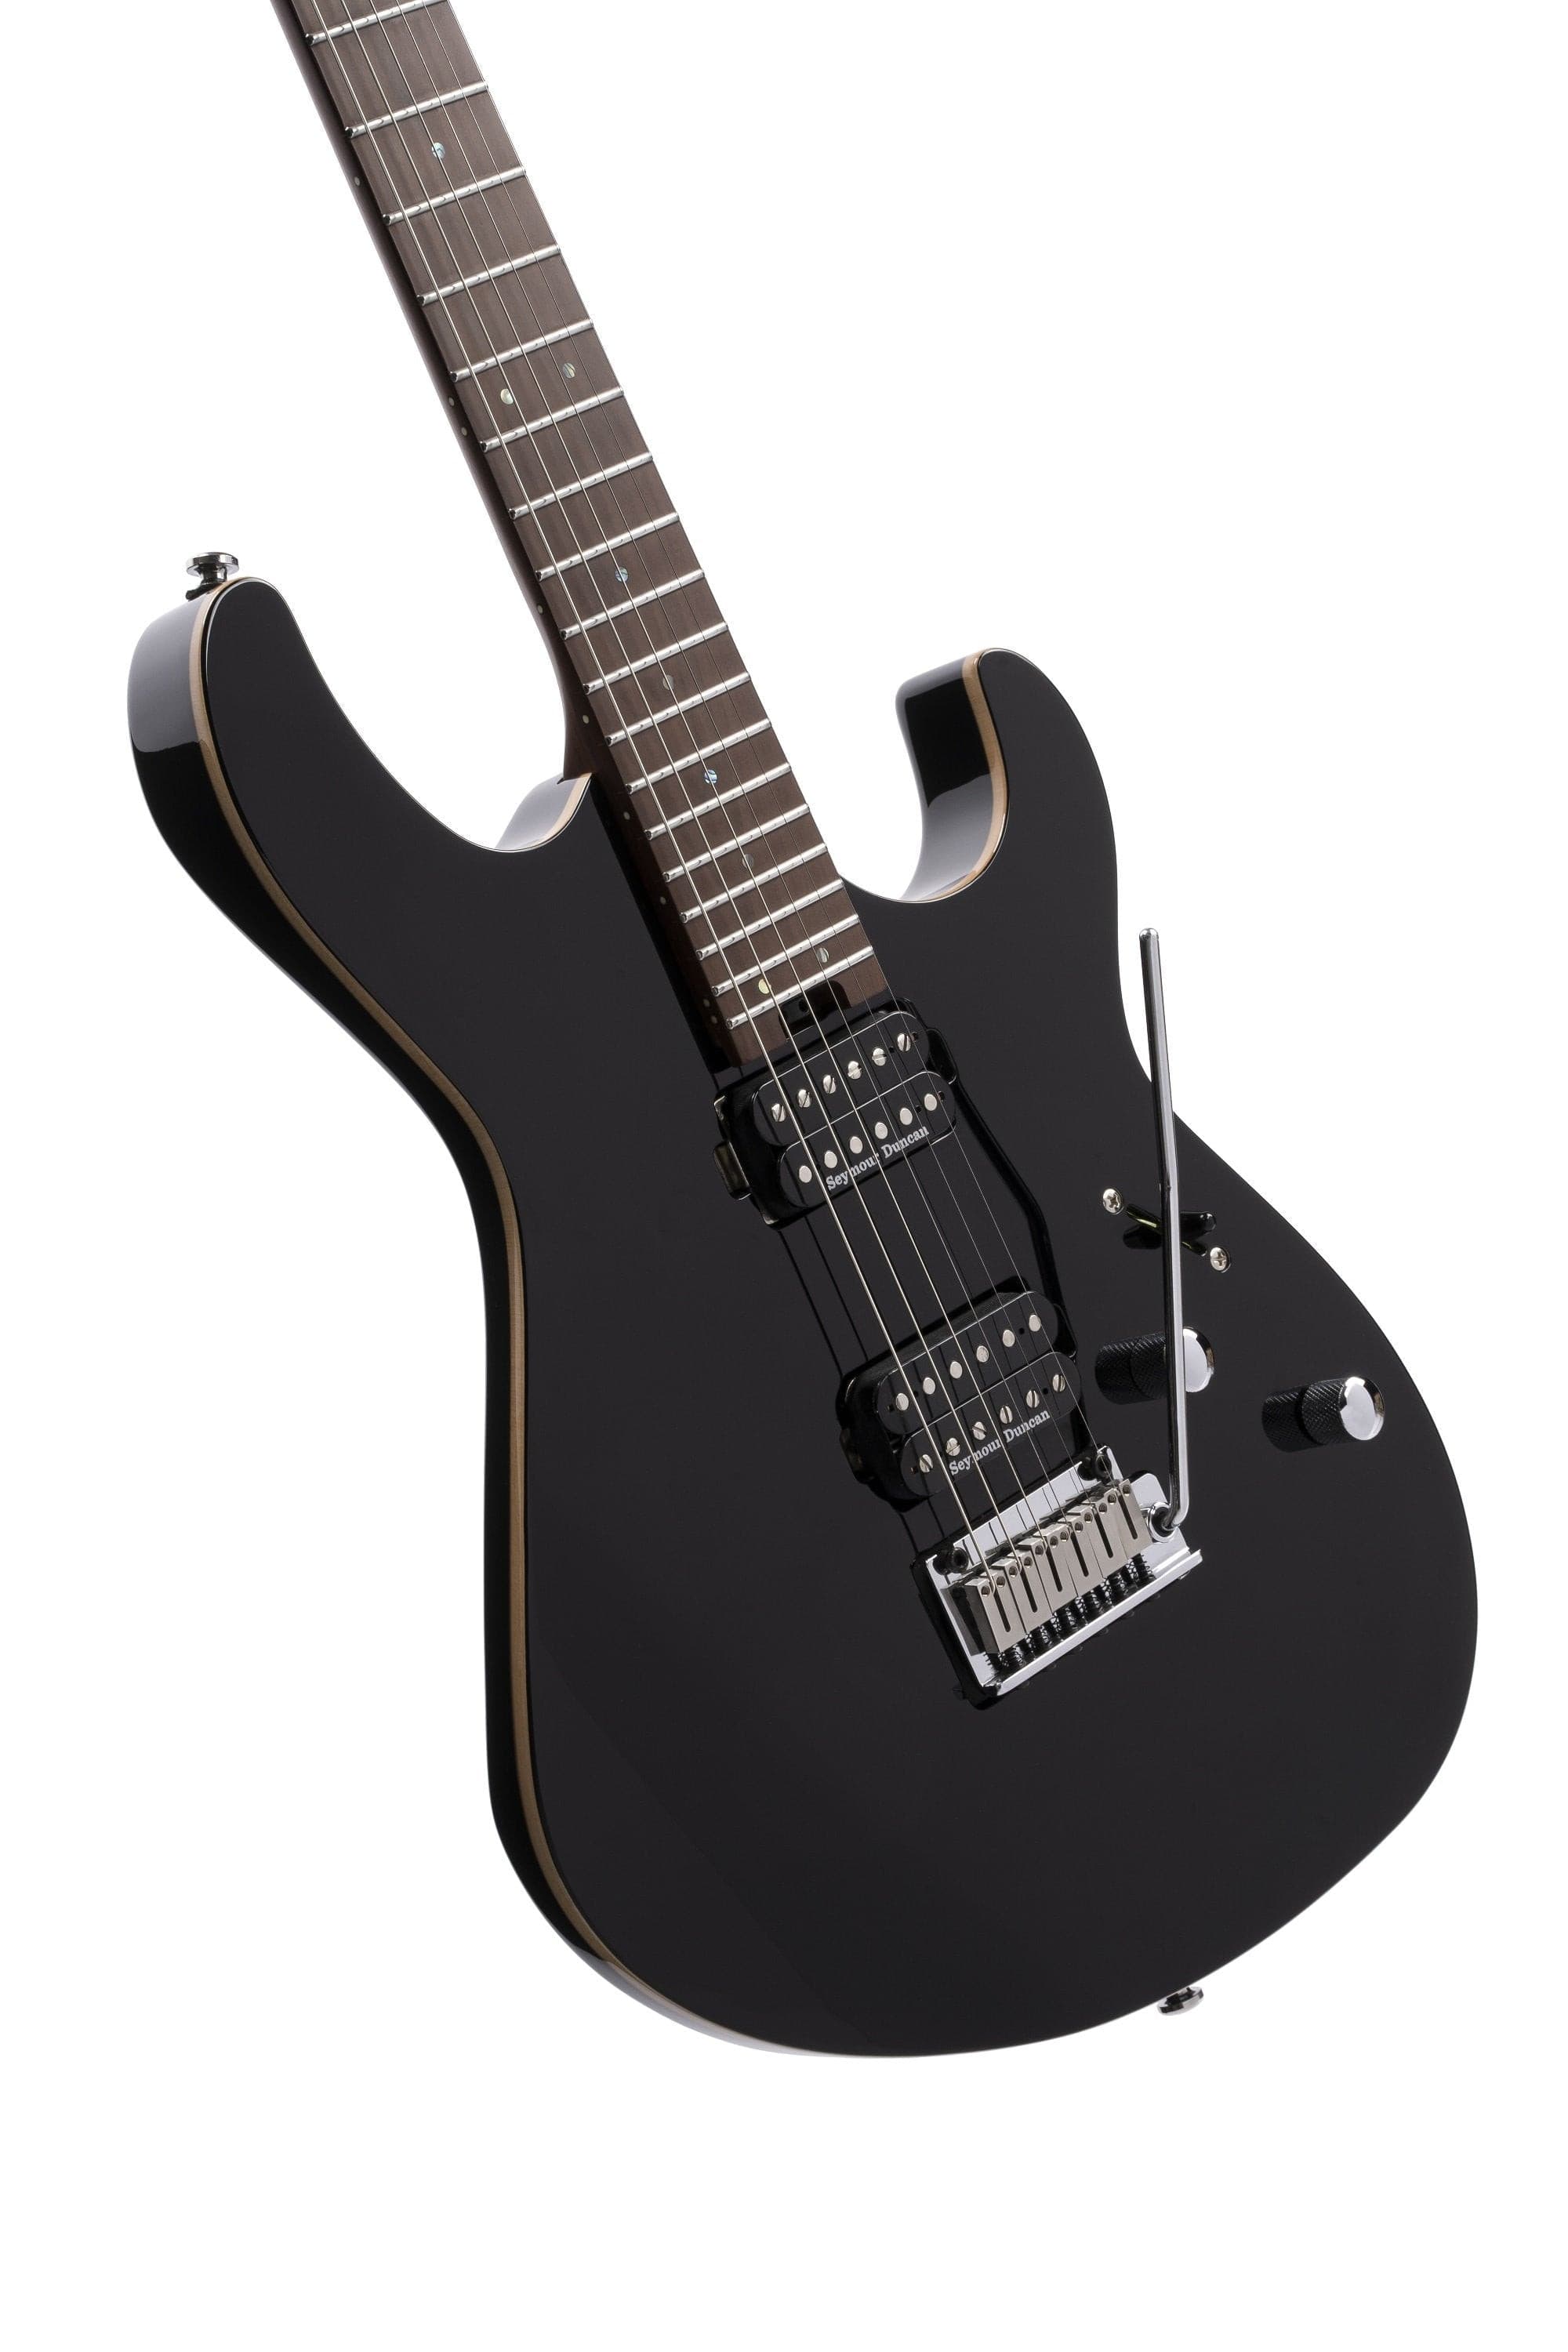 Cort G300 Pro Black-Richards Guitars Of Stratford Upon Avon